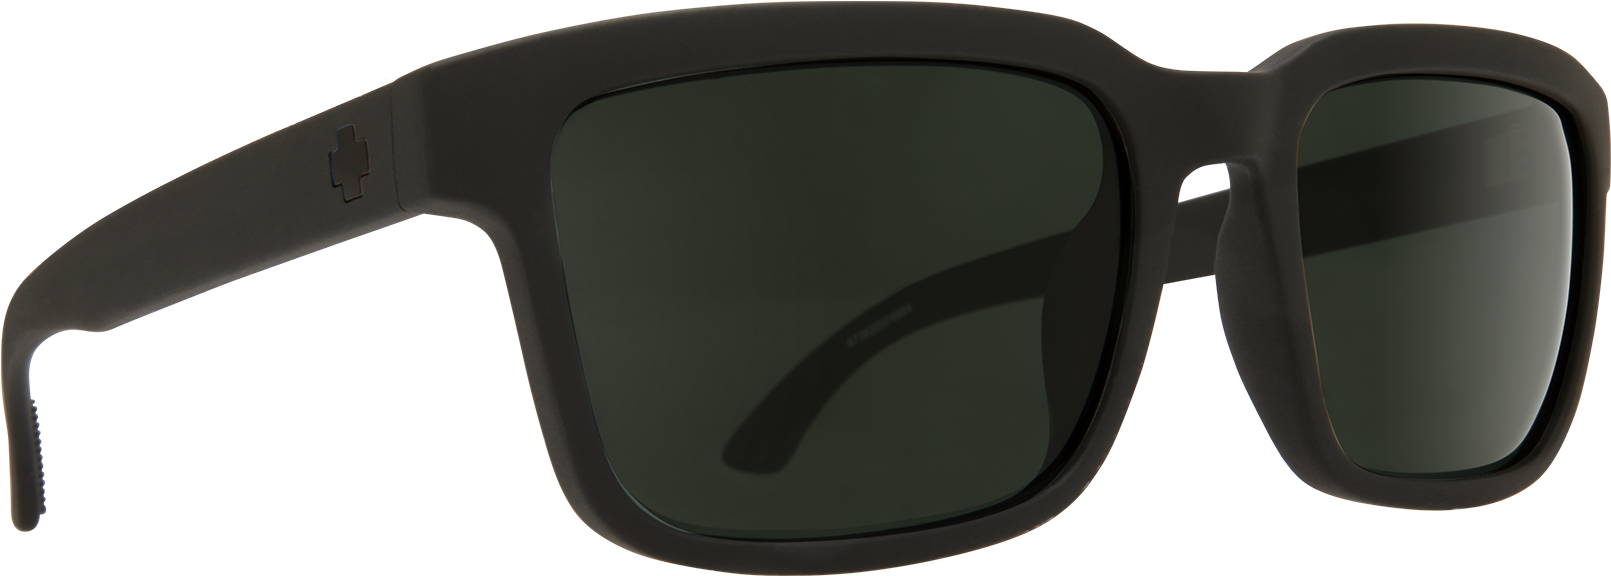 Black Spy Sunglasses PNG